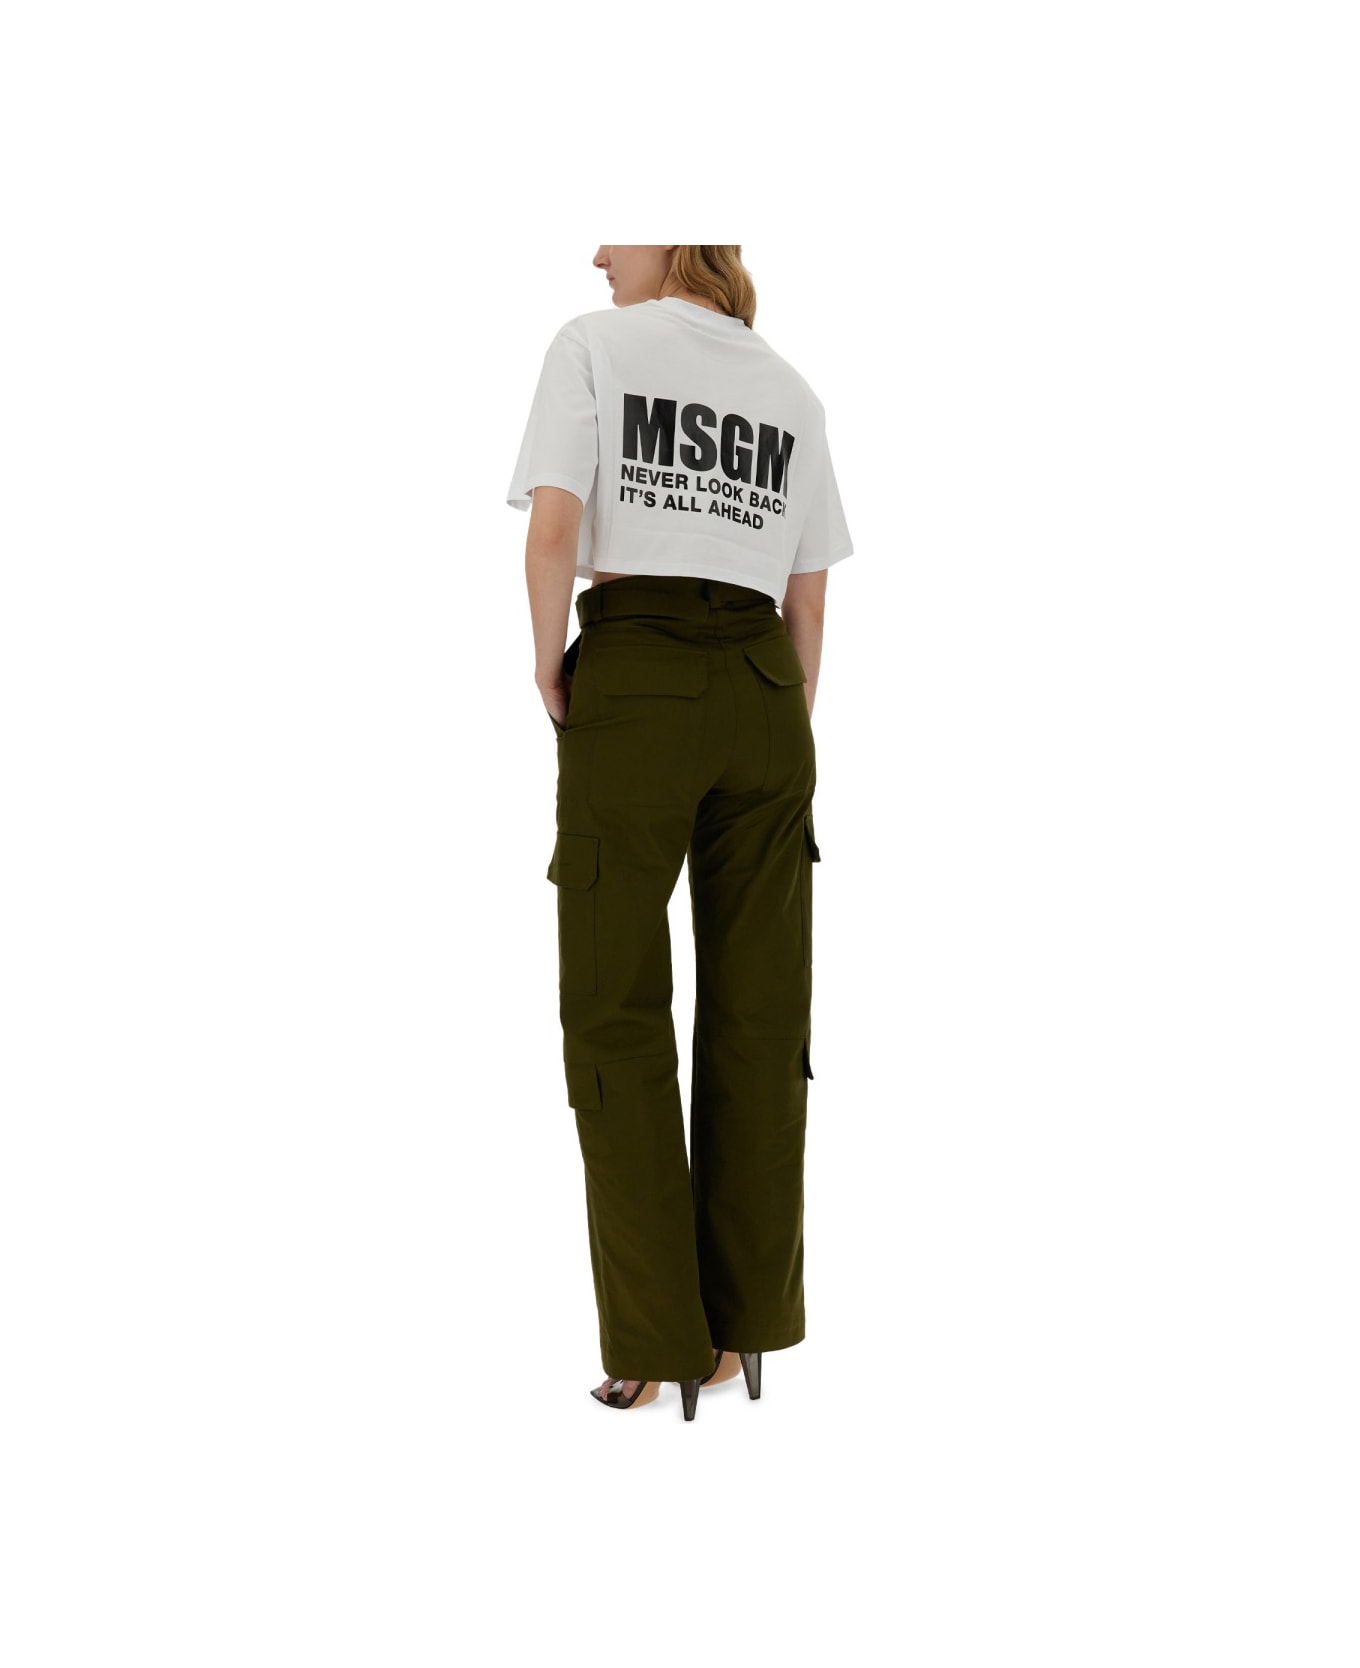 MSGM Cropped T-shirt - WHITE